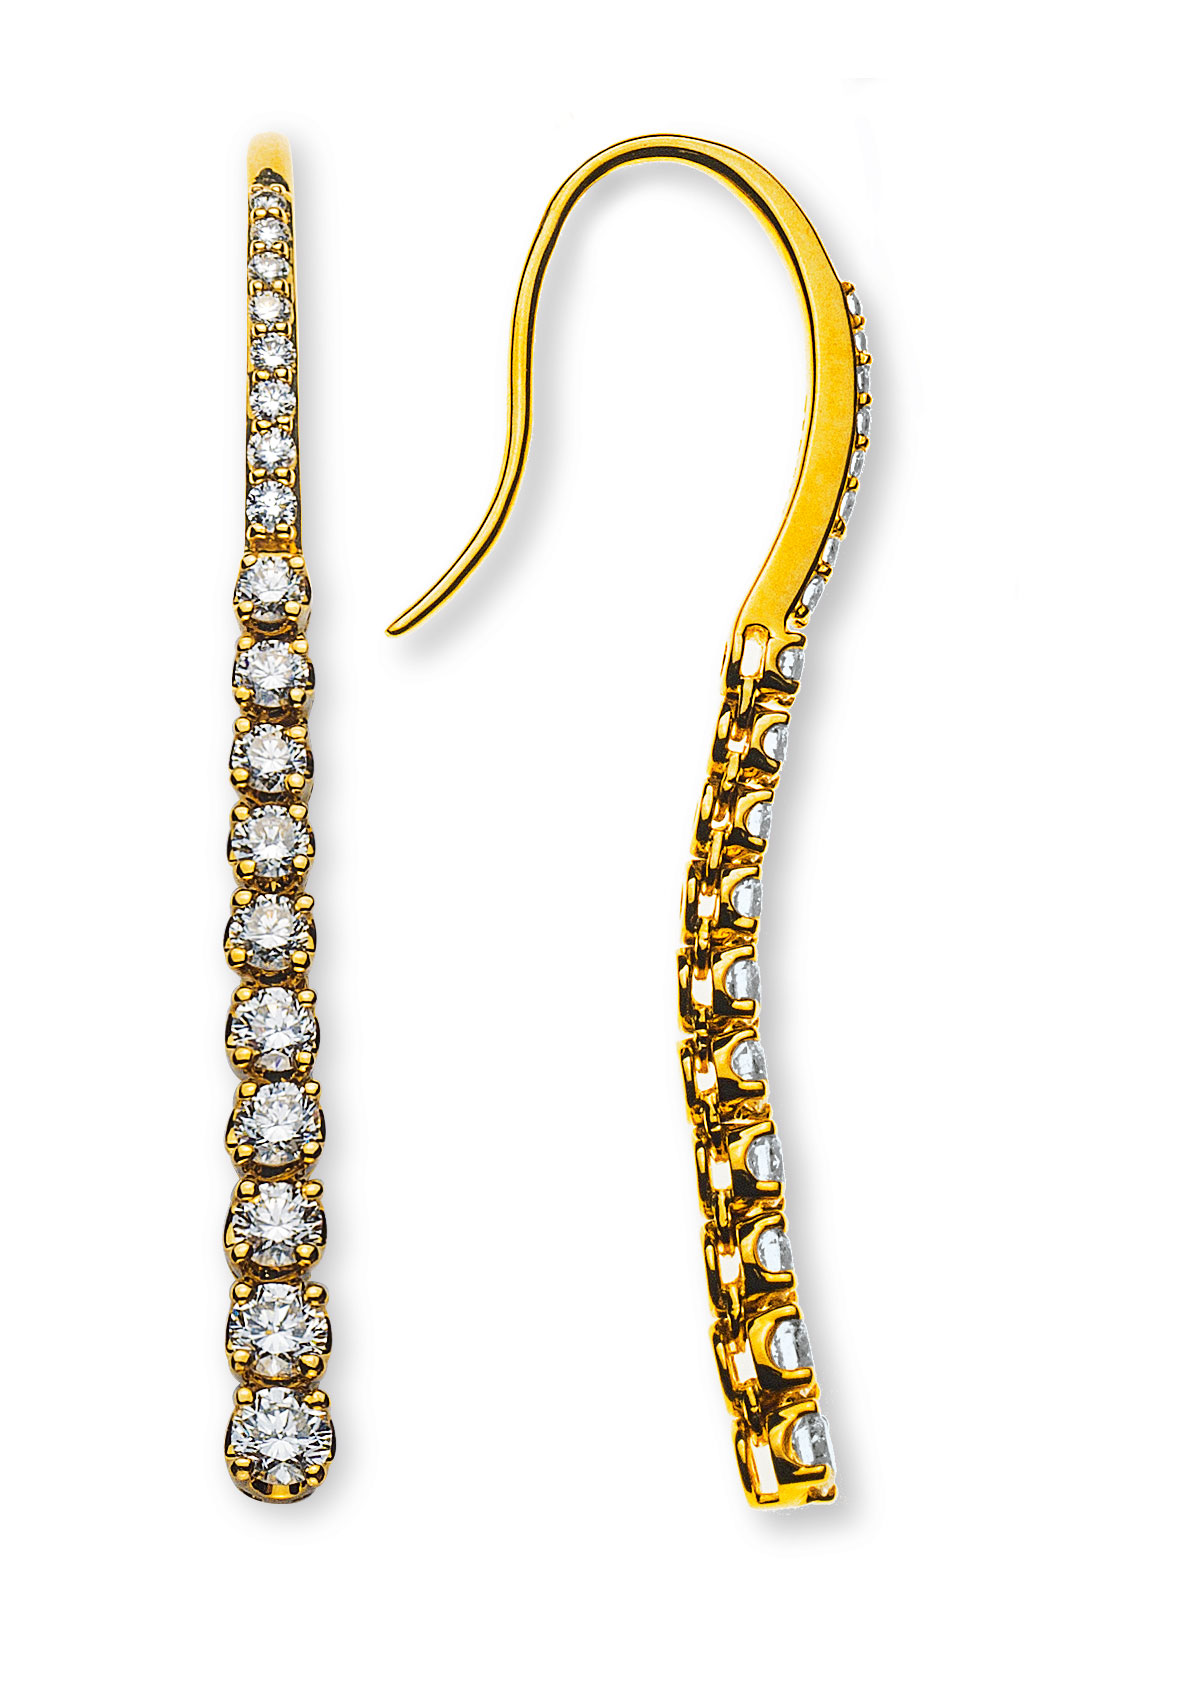 AURONOS Prestige Diamond earring 18K yellow gold 1.17ct.